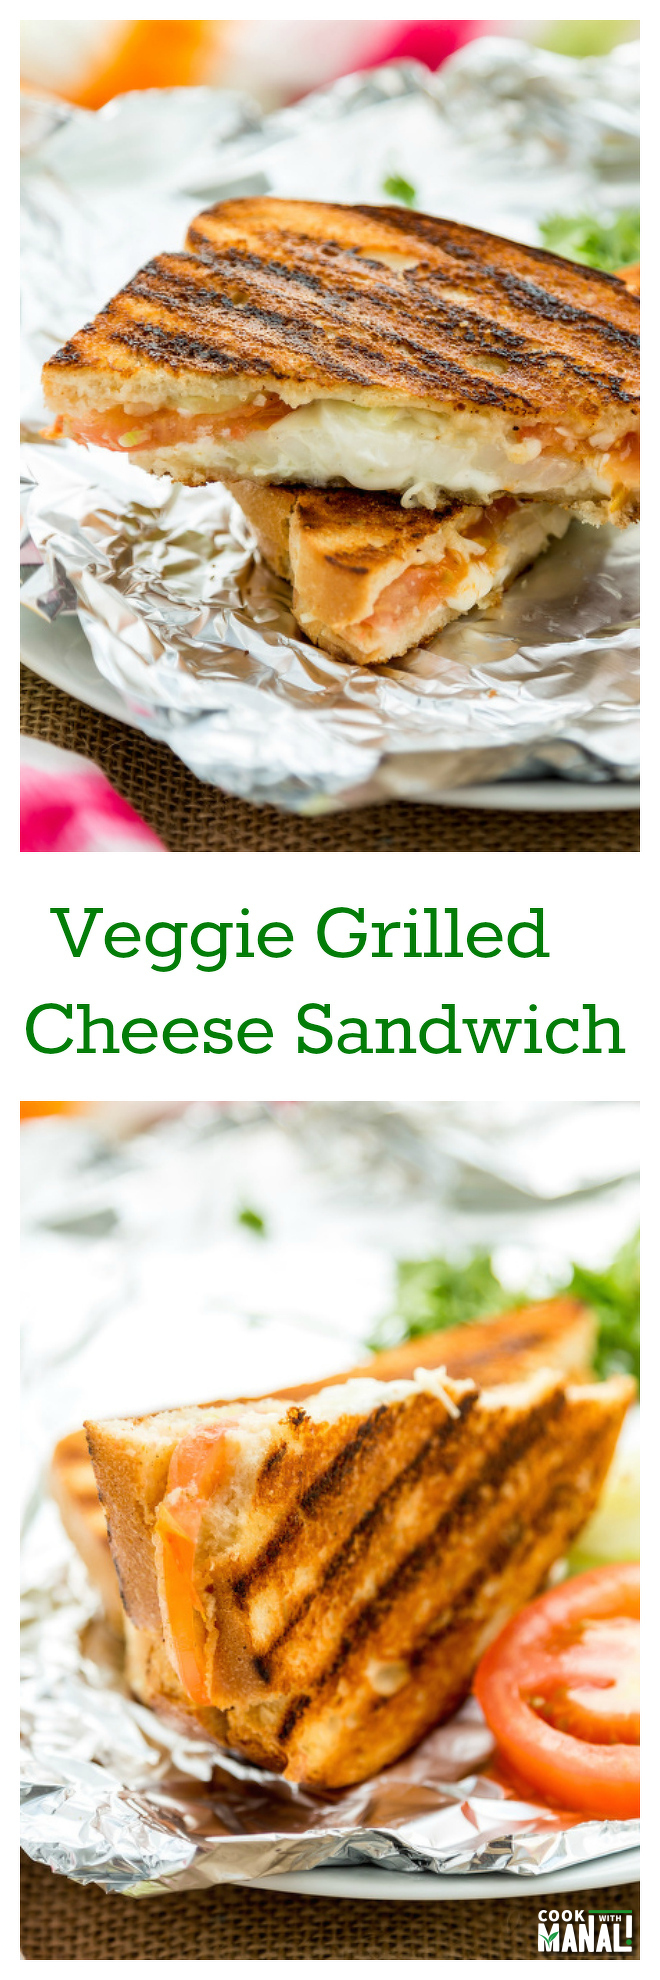 Veggie Grilled Cheese Sandwich Collage